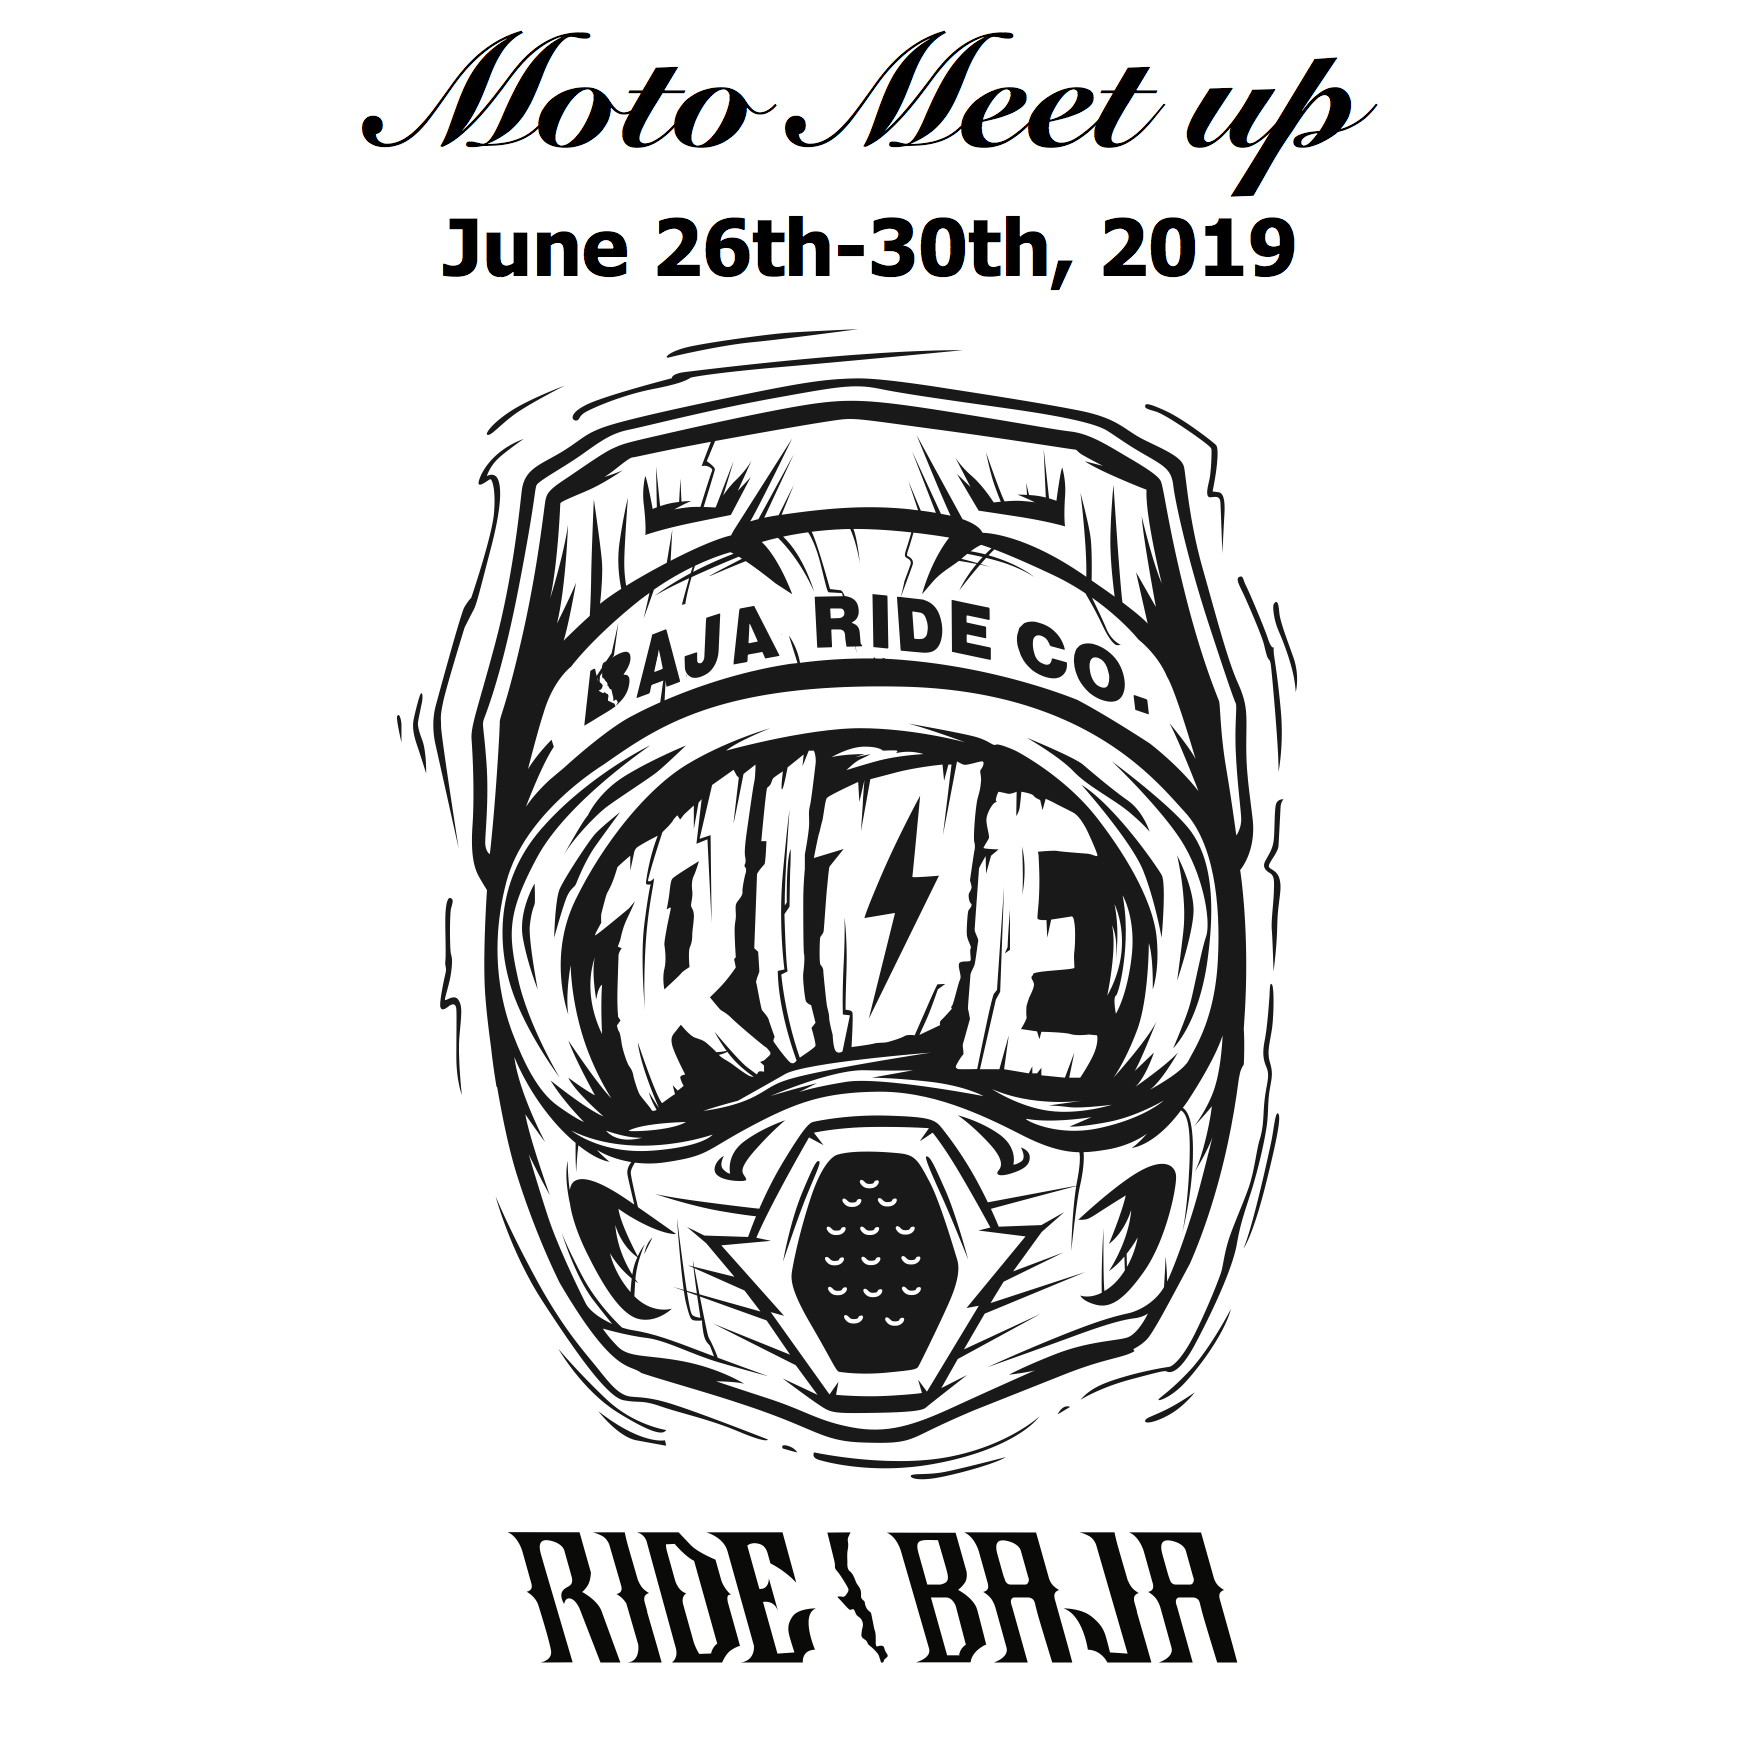 RIDE BAJA MOTO MEET UP JUNE 26-30th, 2019